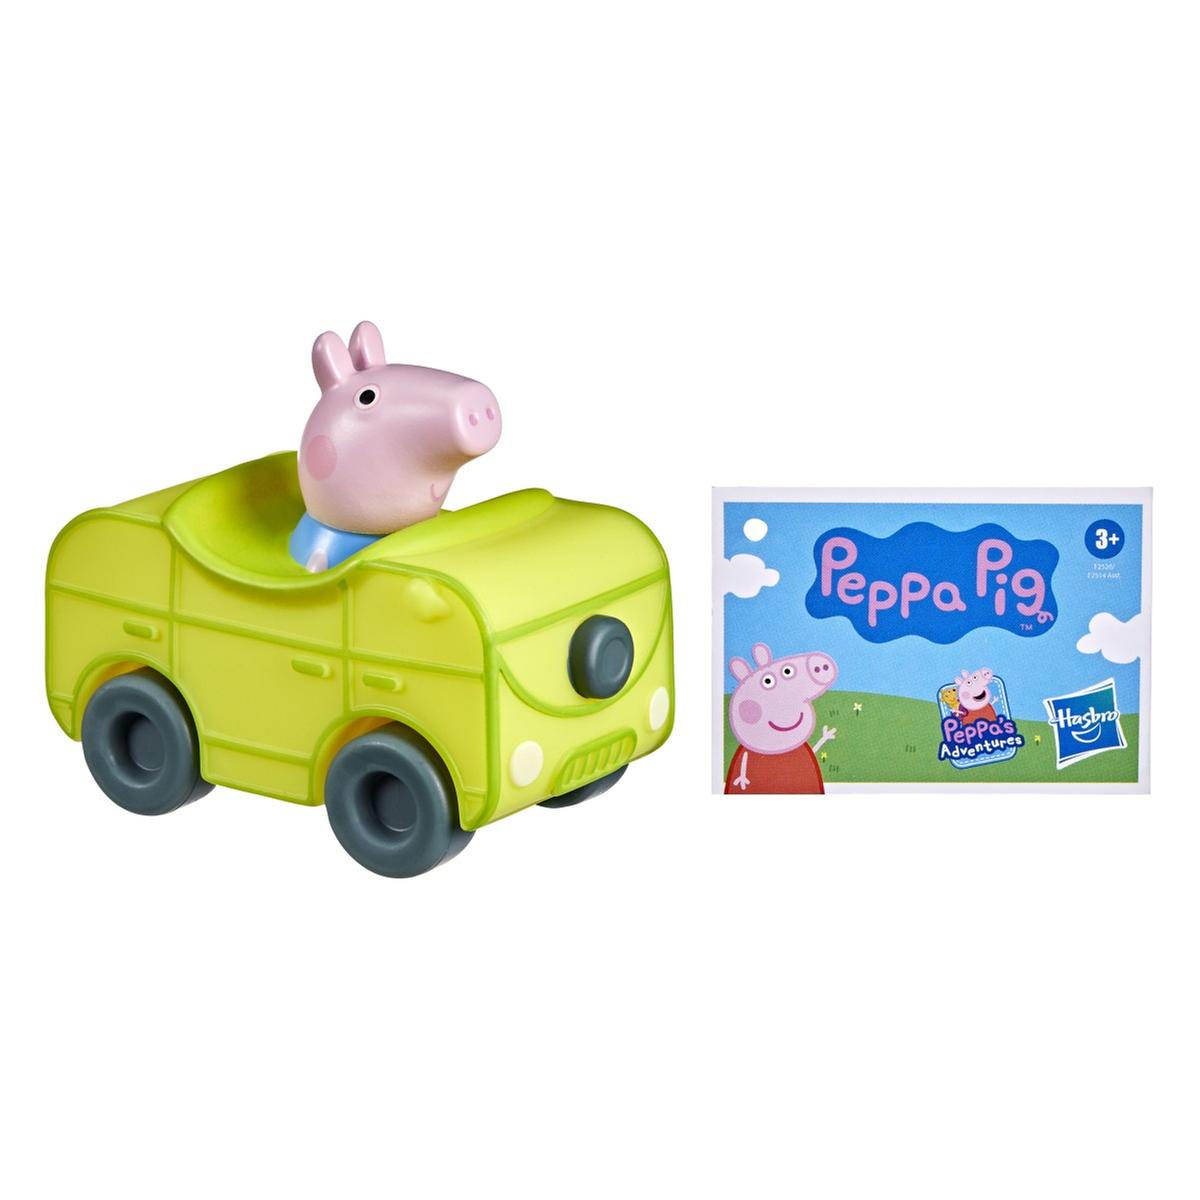 Peppa Pig - George Cerdito con coche | Peppa Pig. Cat 54 | Toys"R"Us España